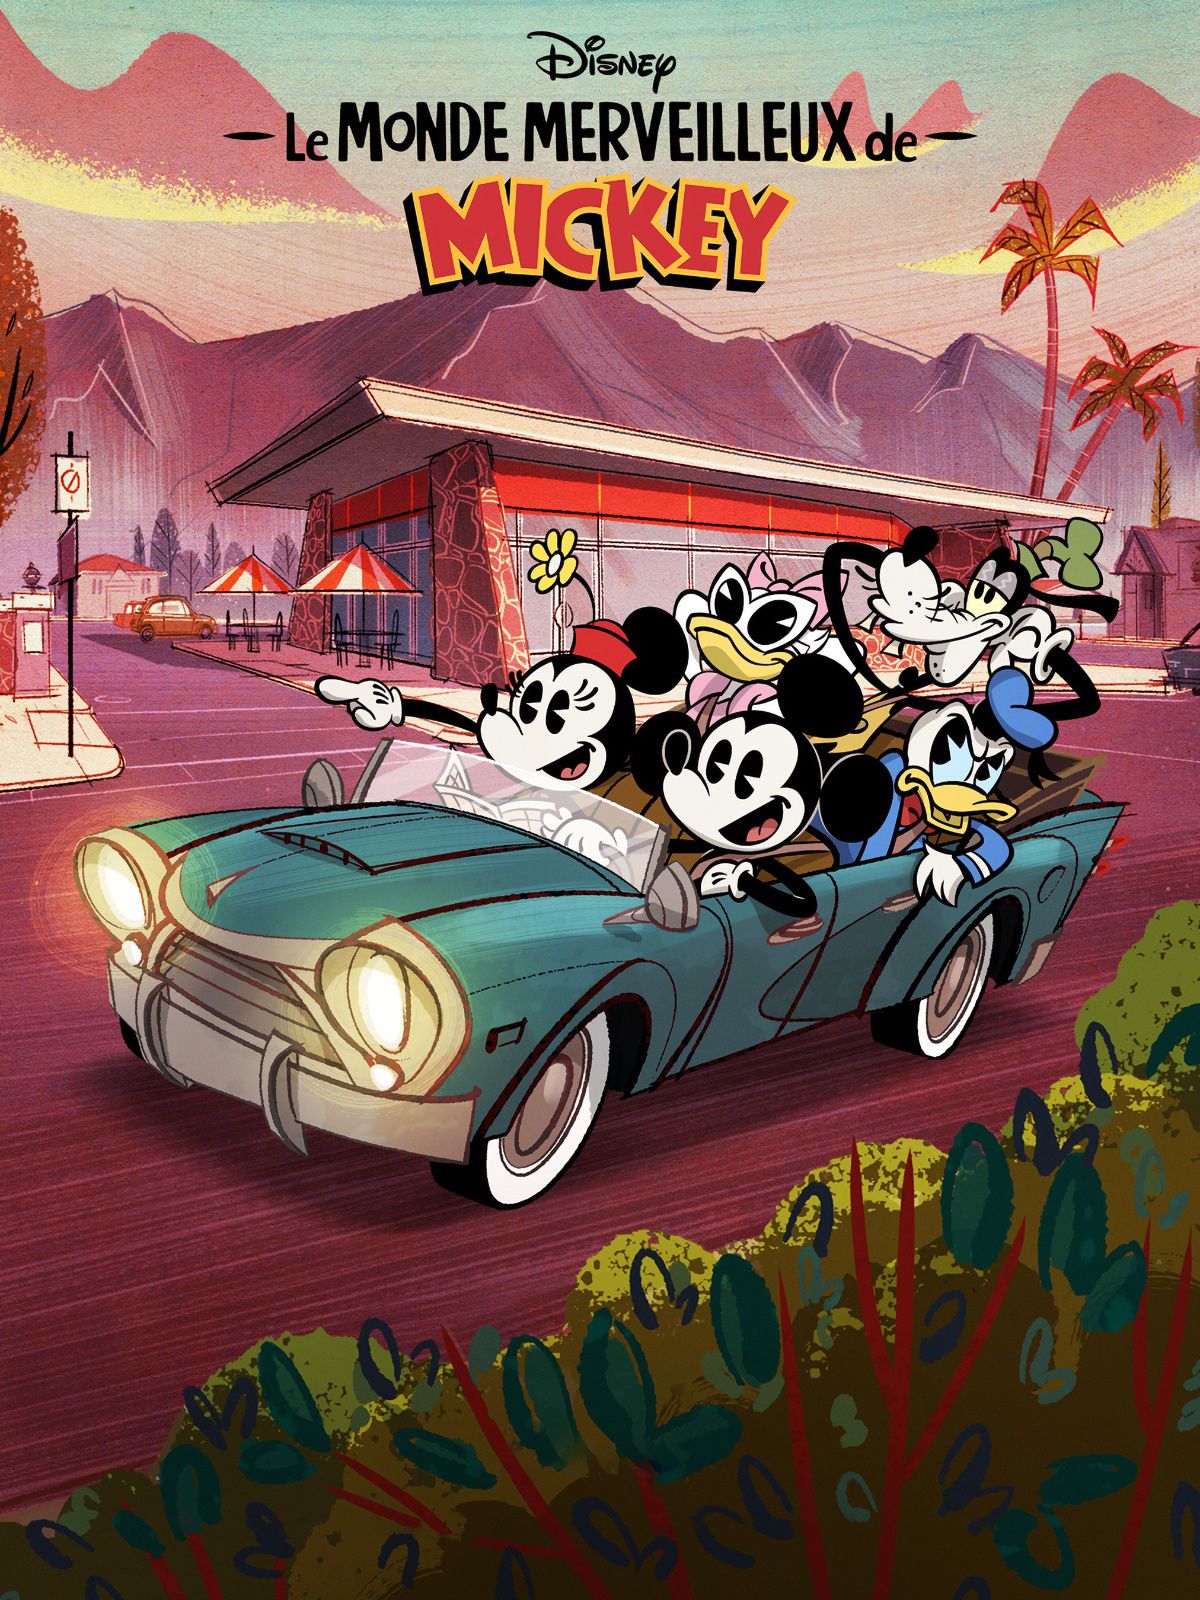 Le Monde Merveilleux de Mickey - Dessin animé (2020) streaming VF gratuit complet